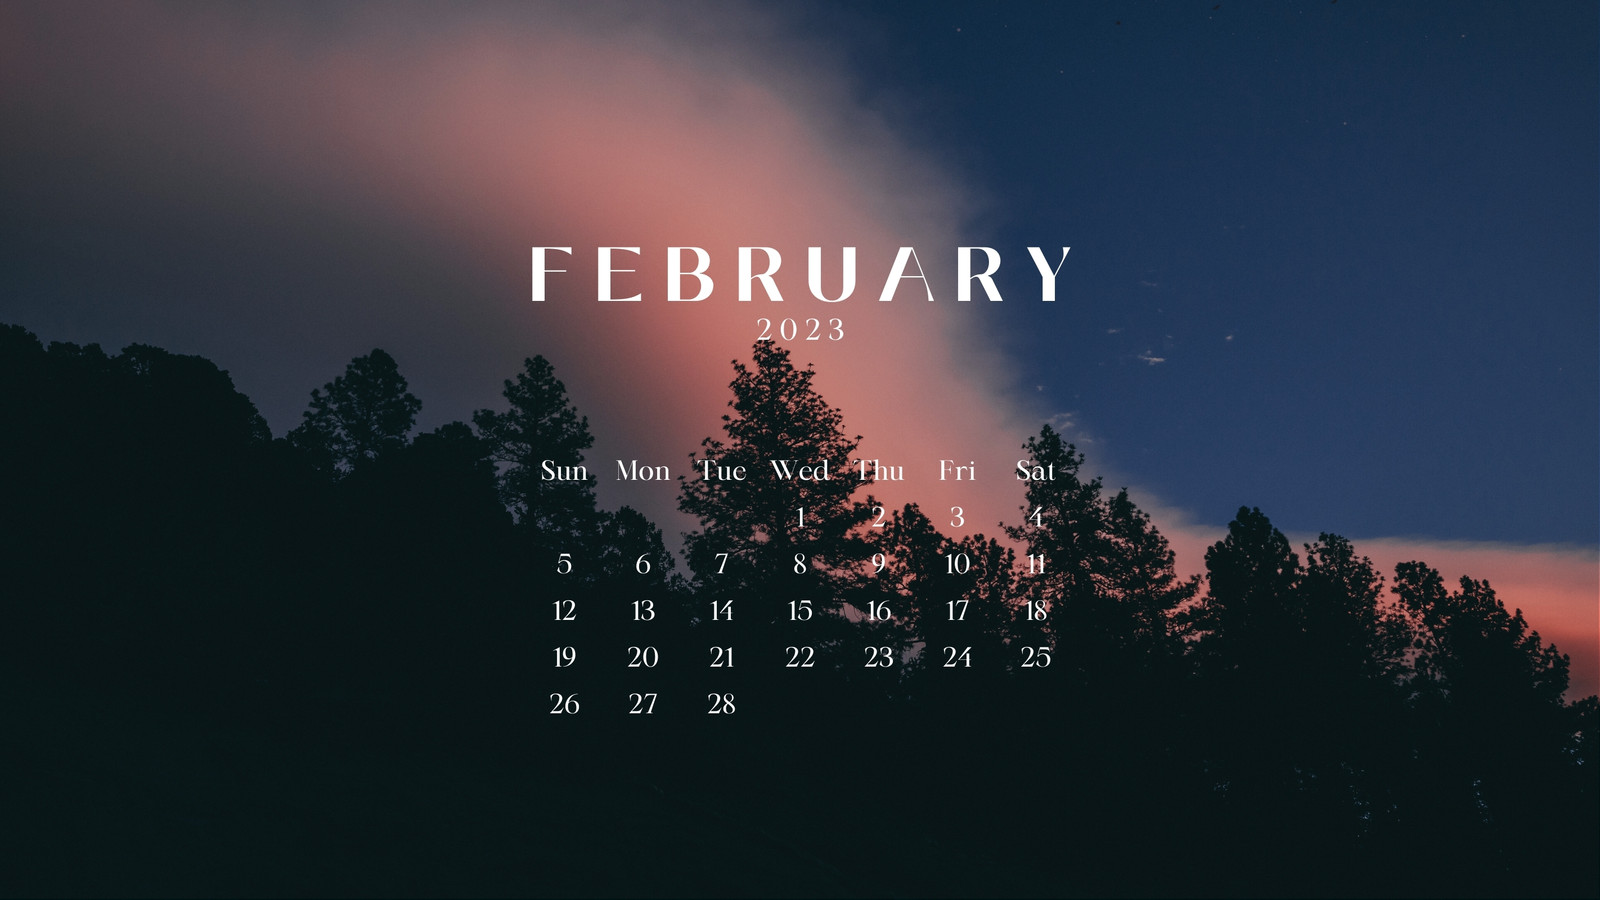 Download February Desktop Wallpapers Julep